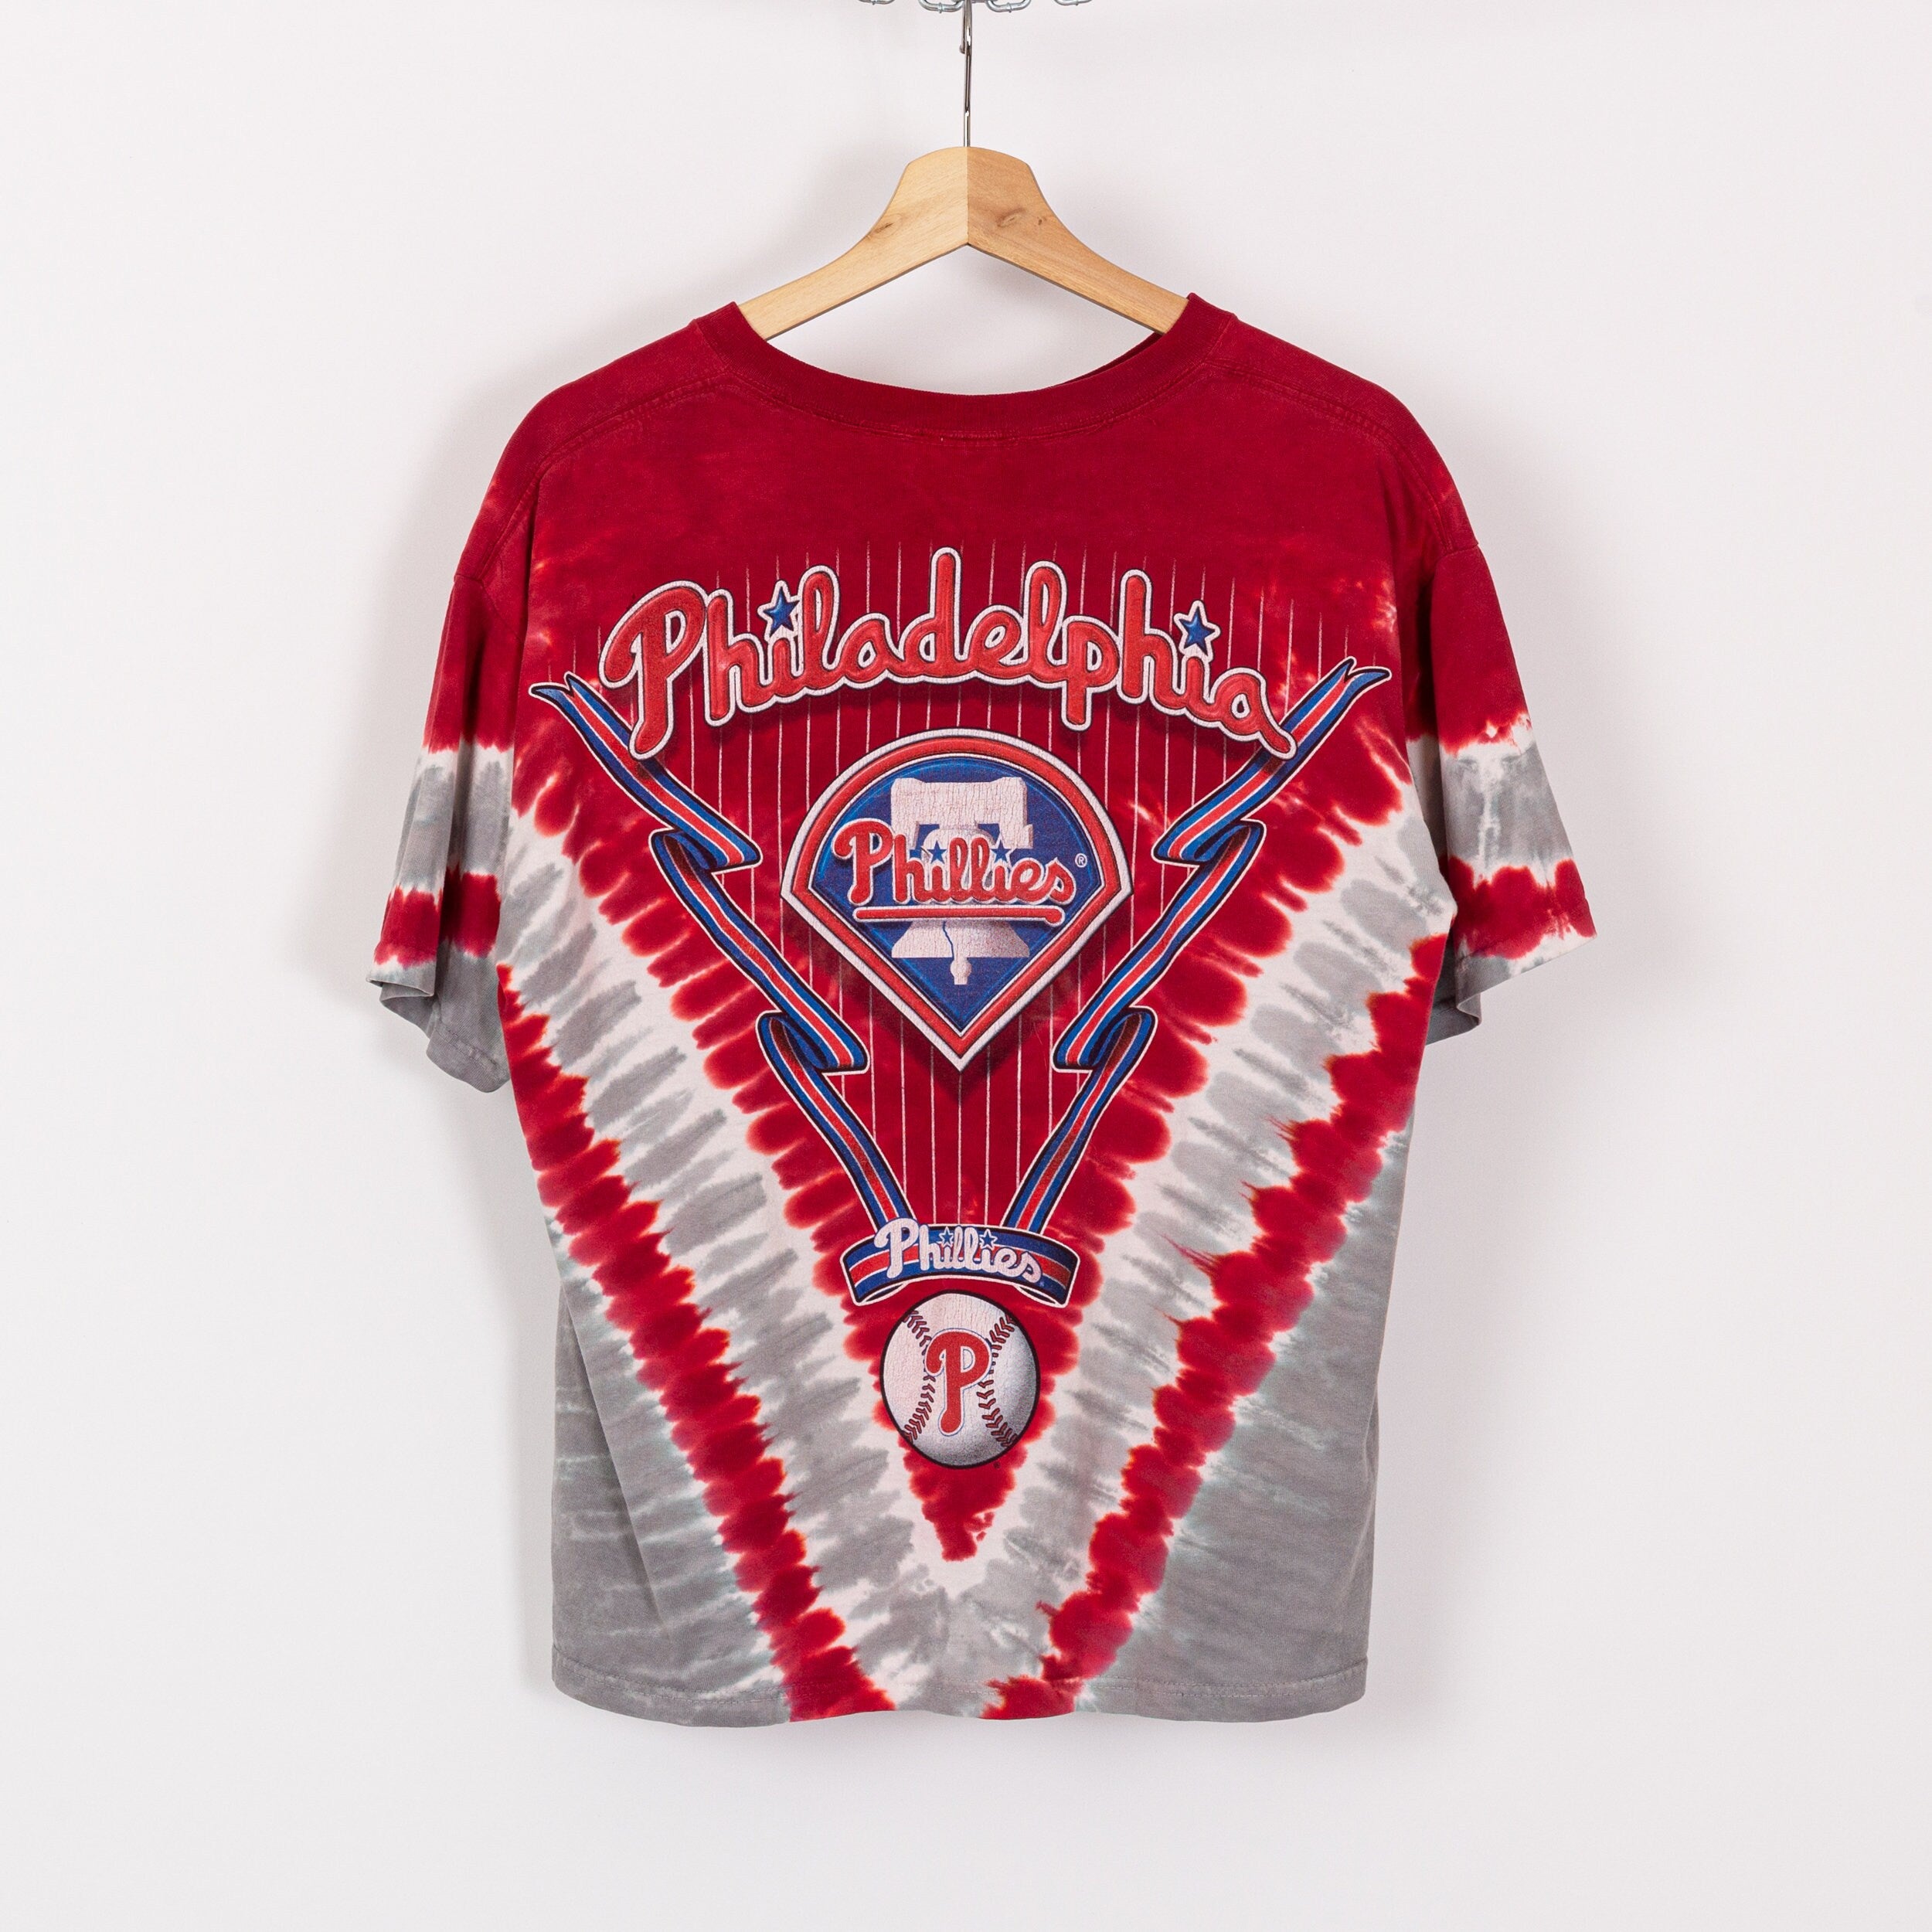 Classic Phillies jersey